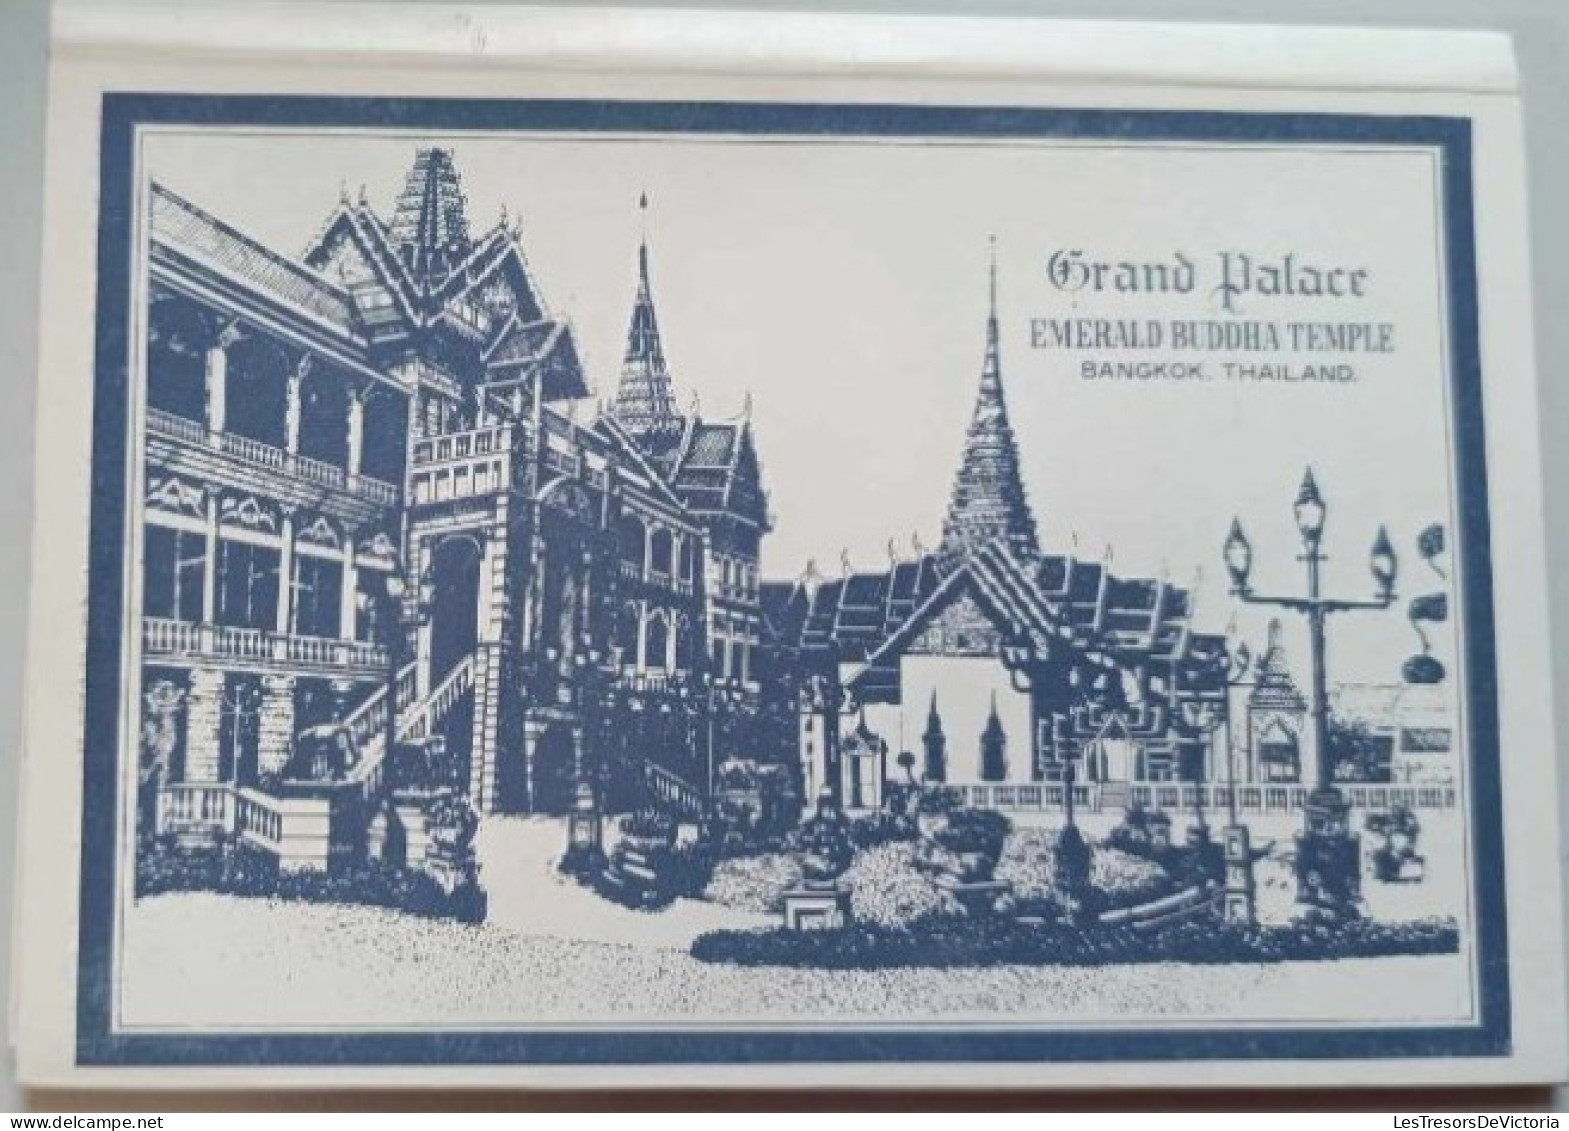 Carnet De Cartes Complet - Thaïlande - Bongkok - Emerald Buddha Temple - Grand Palace - Carte Postale Ancienne - Thaïland